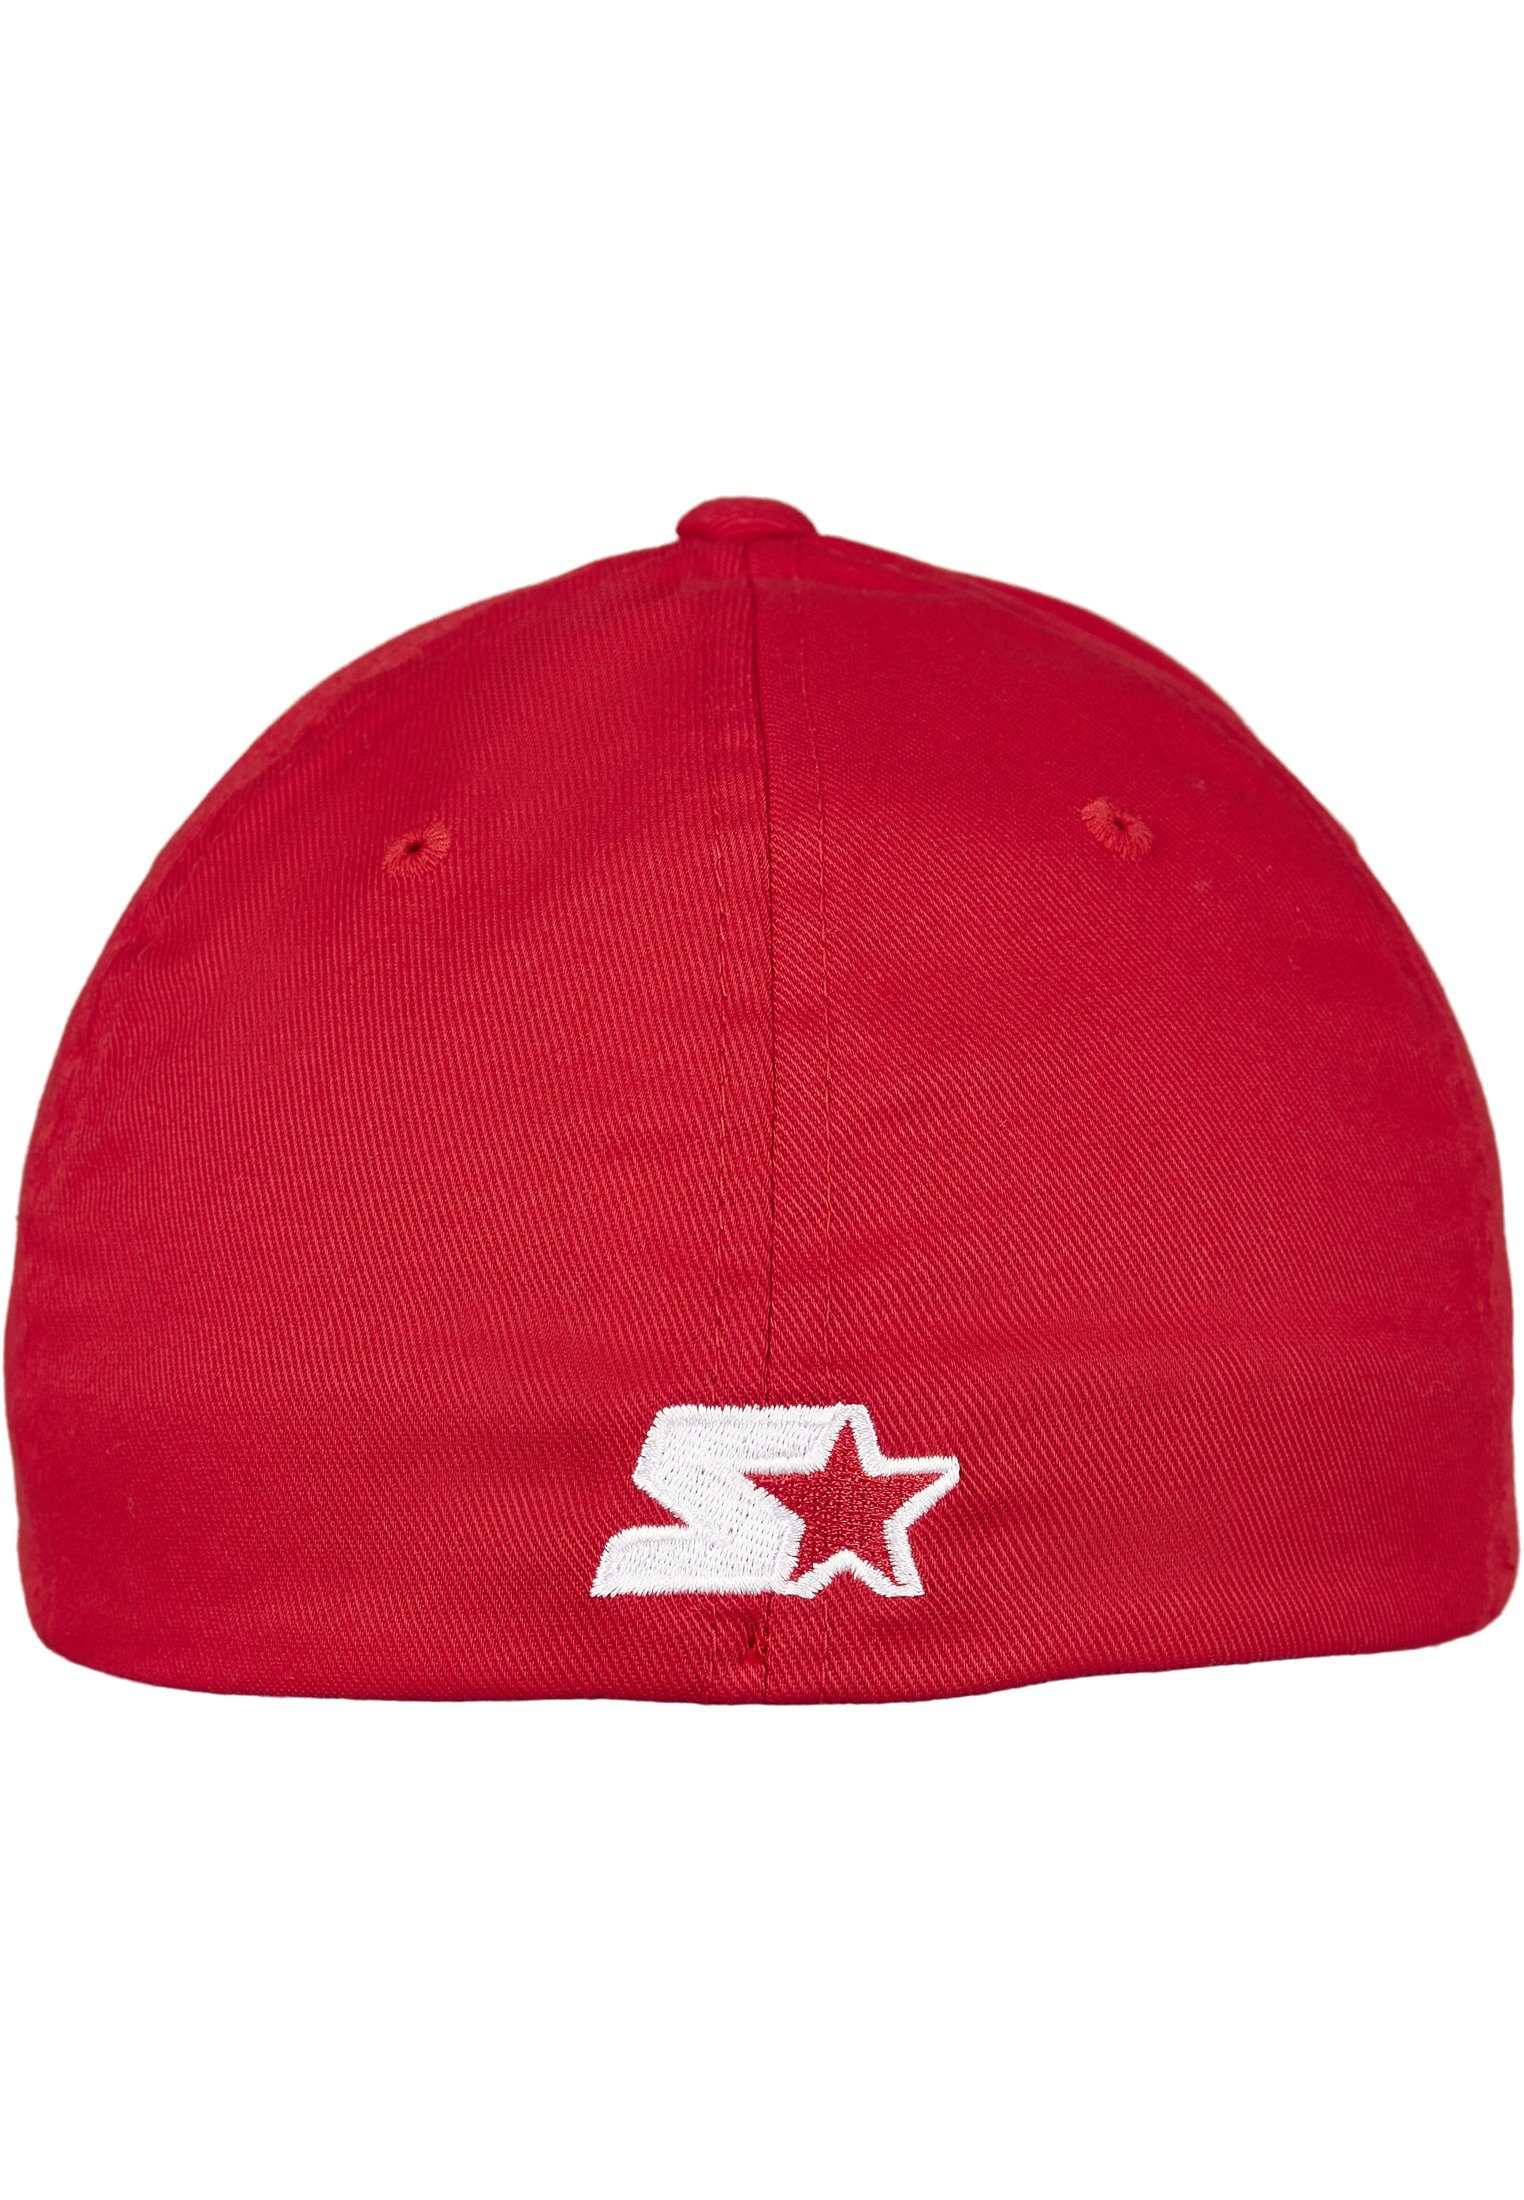 Flexfit Black Cap Cap Flex Starter red Herren Starter Label Chicago